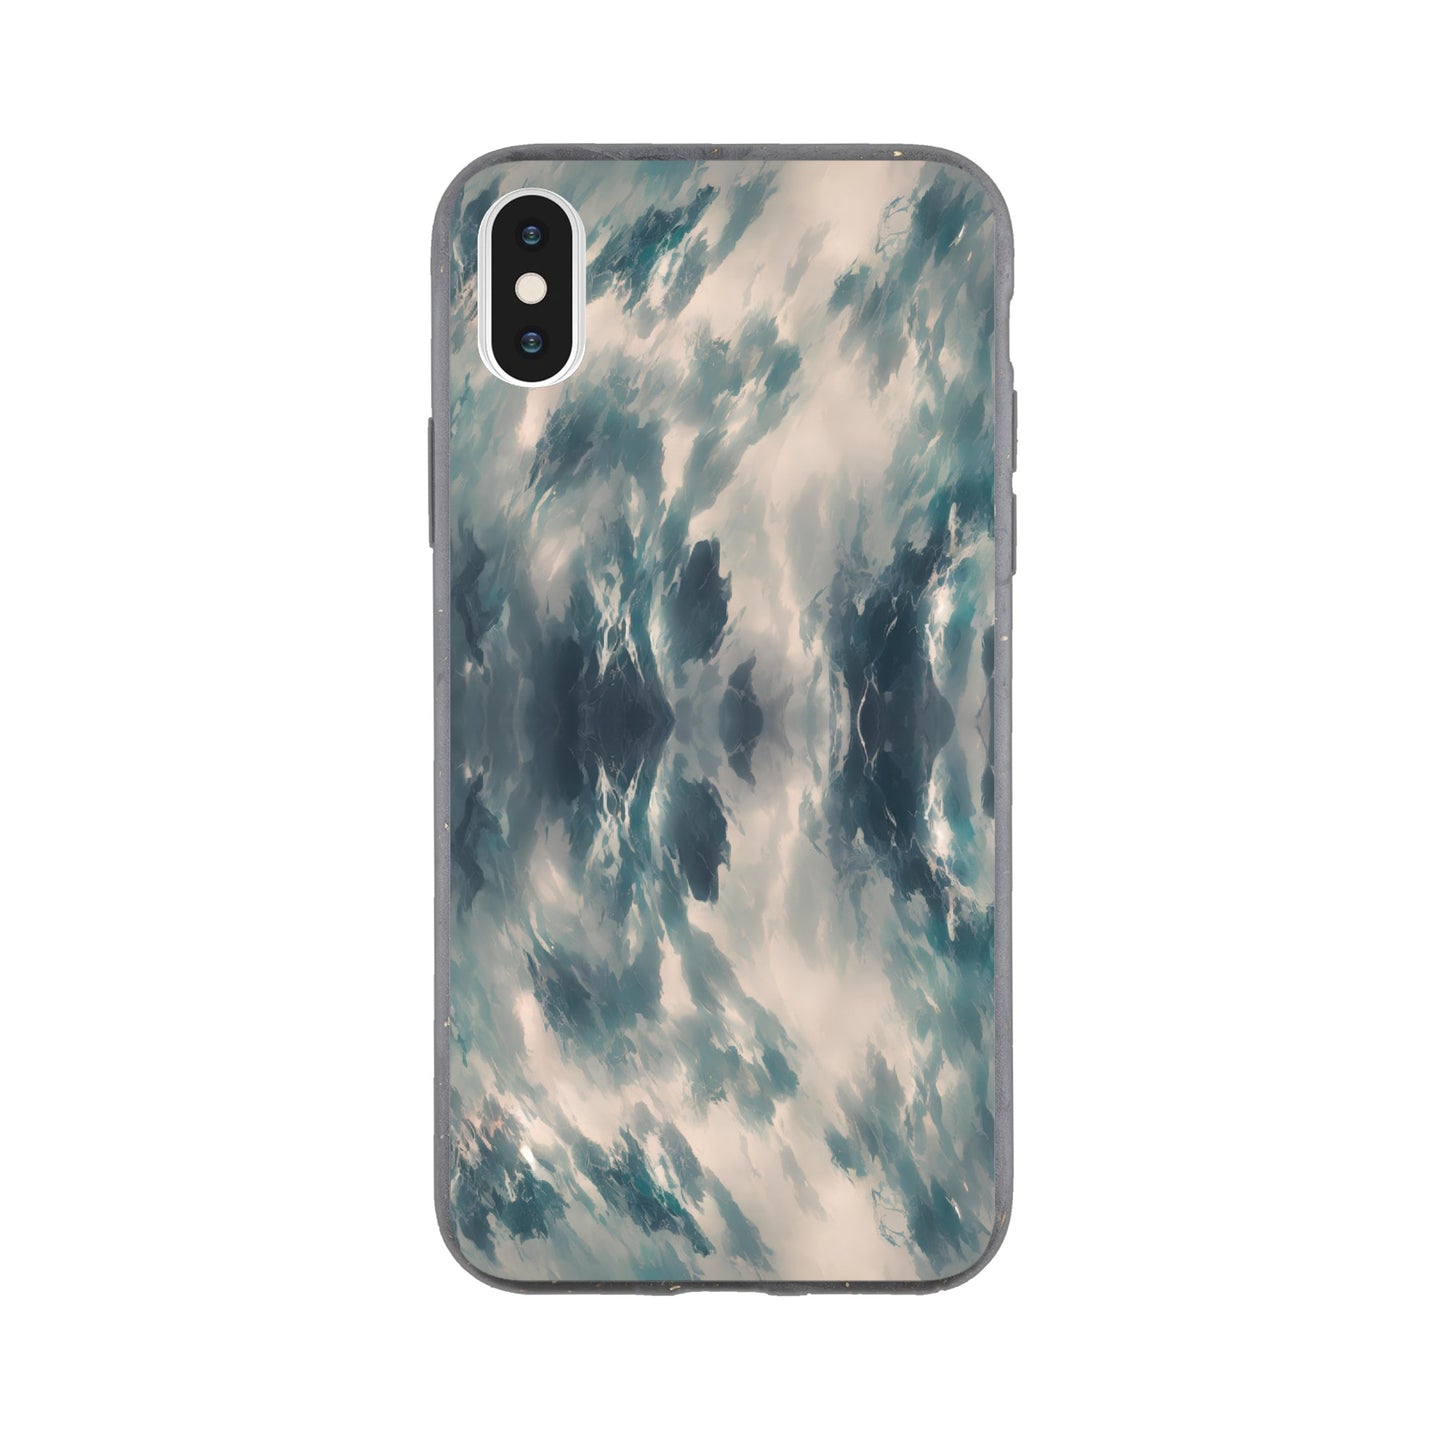 Cloudy Mountain : Bio iphone case